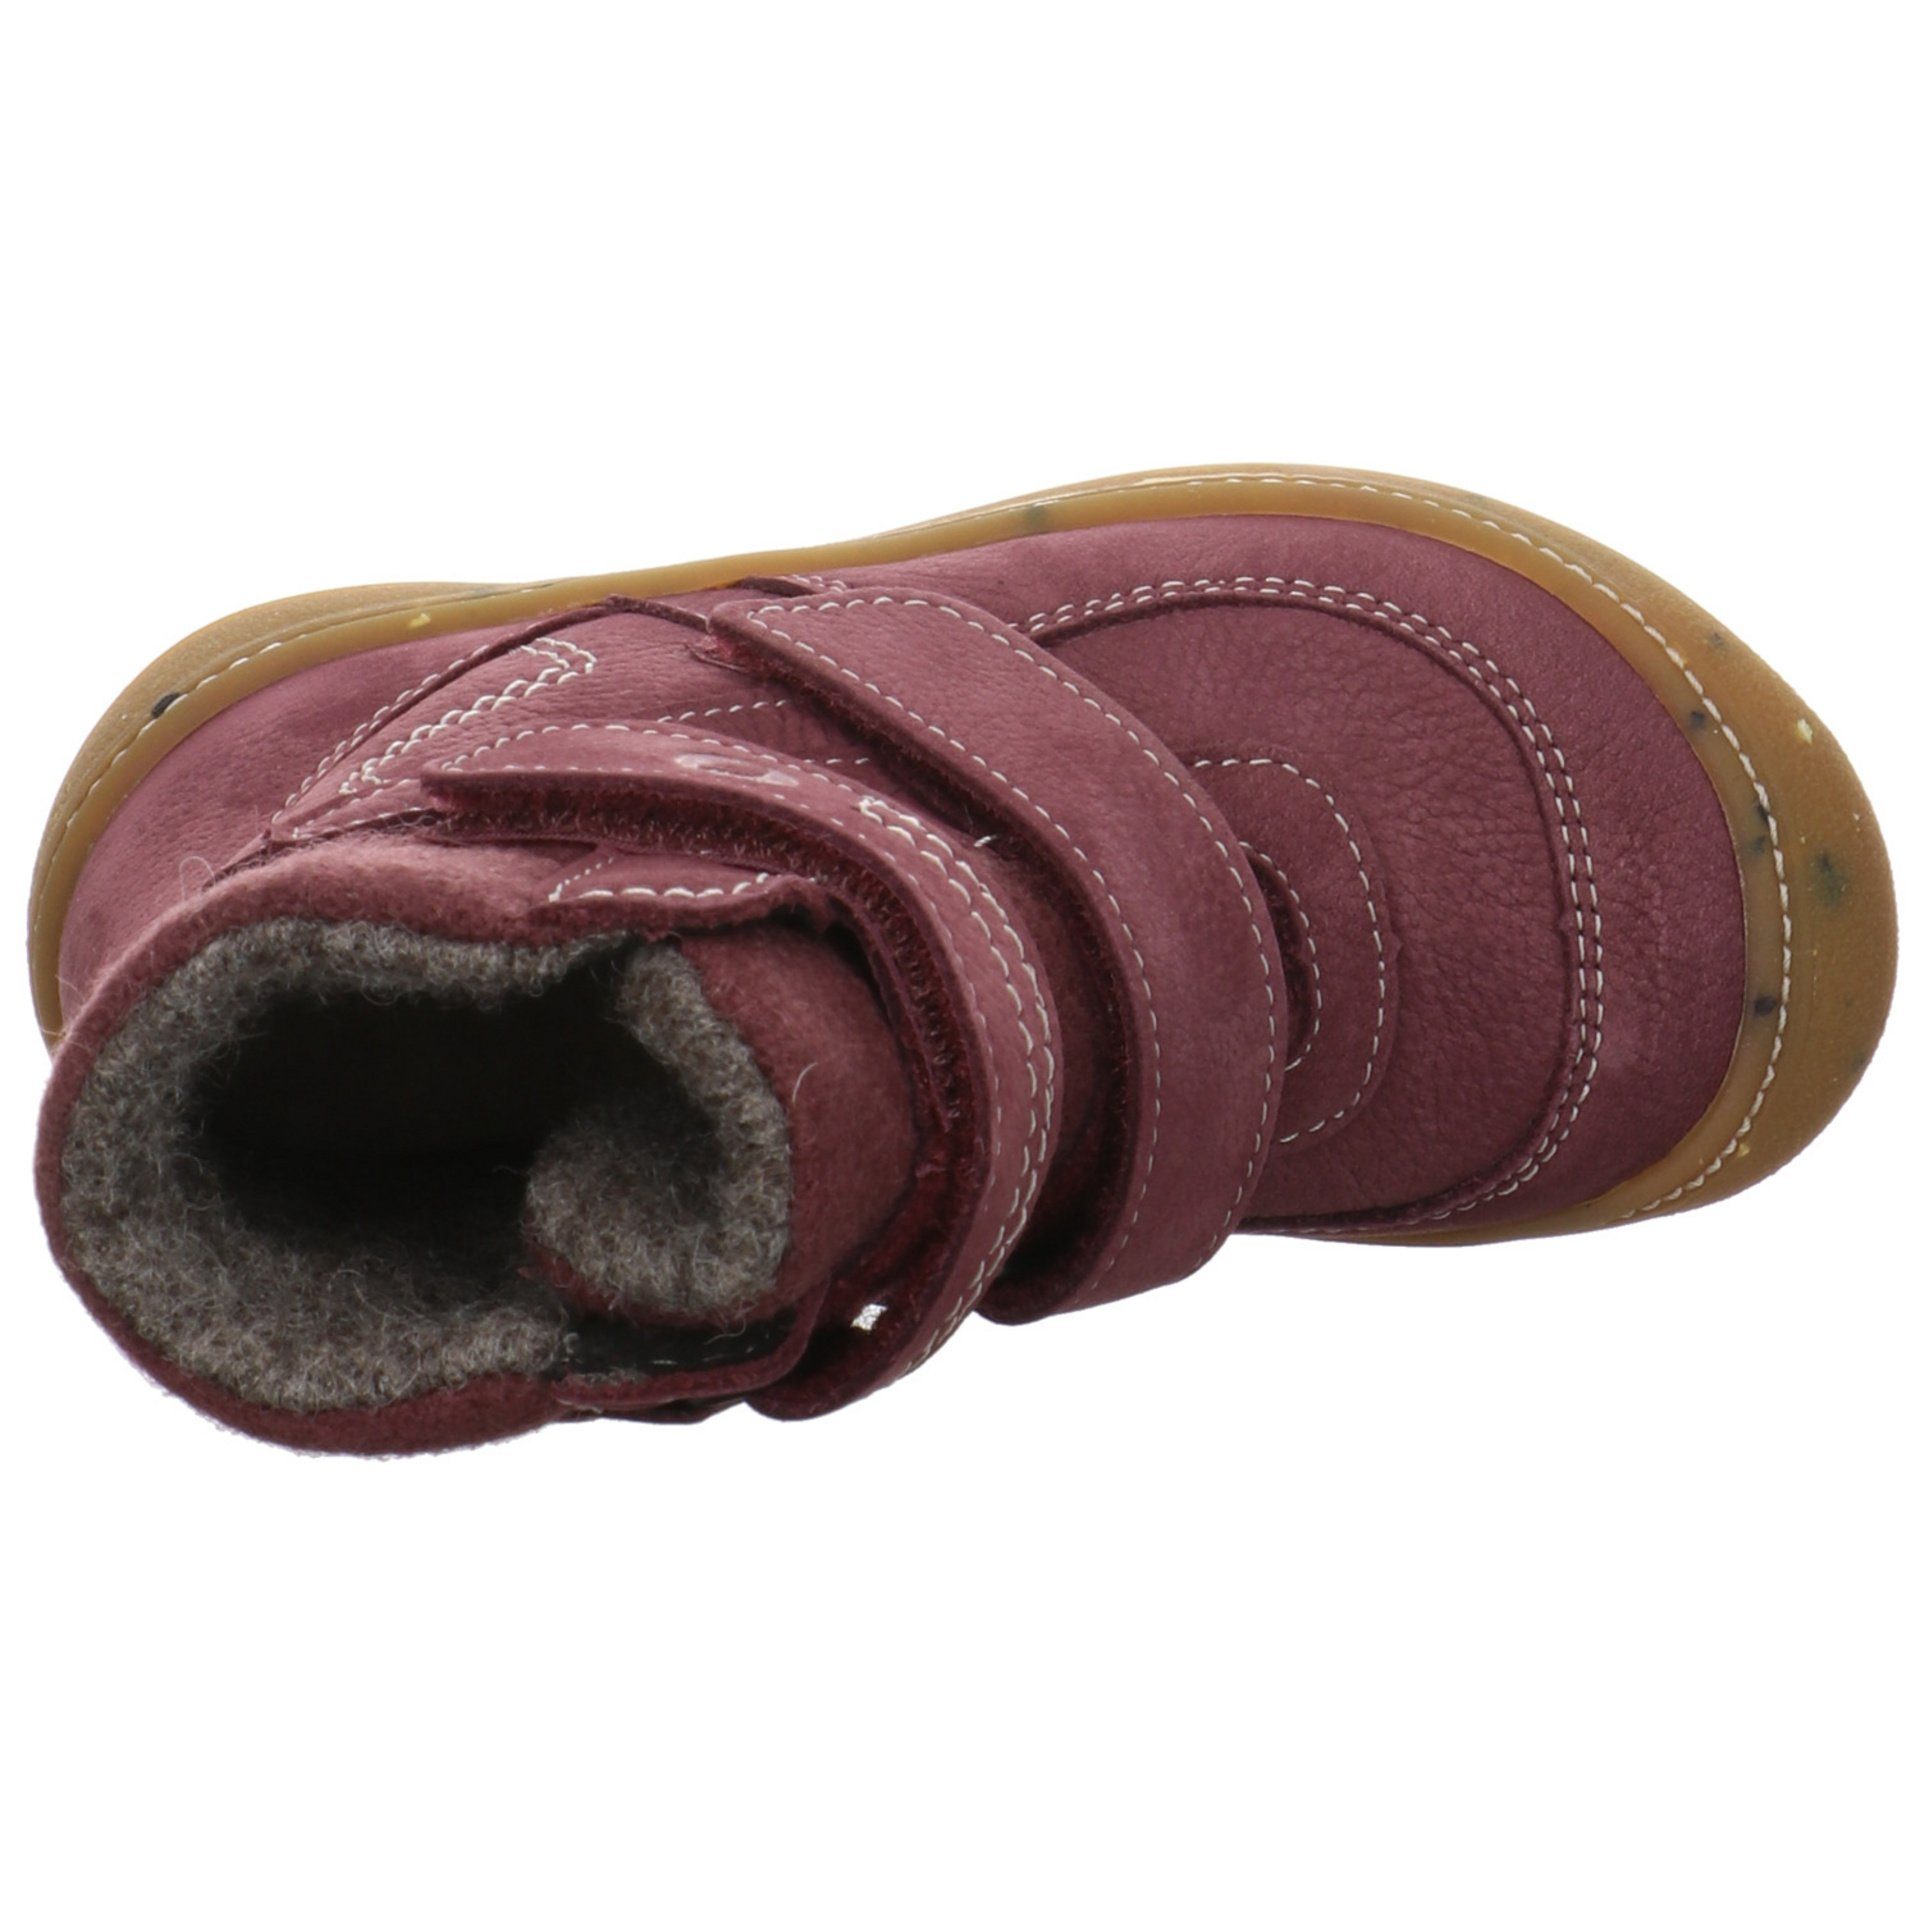 pflaume Leder-/Textilkombination Leder-/Textilkombination Wood uni Ricosta Winterboots Boots Tex